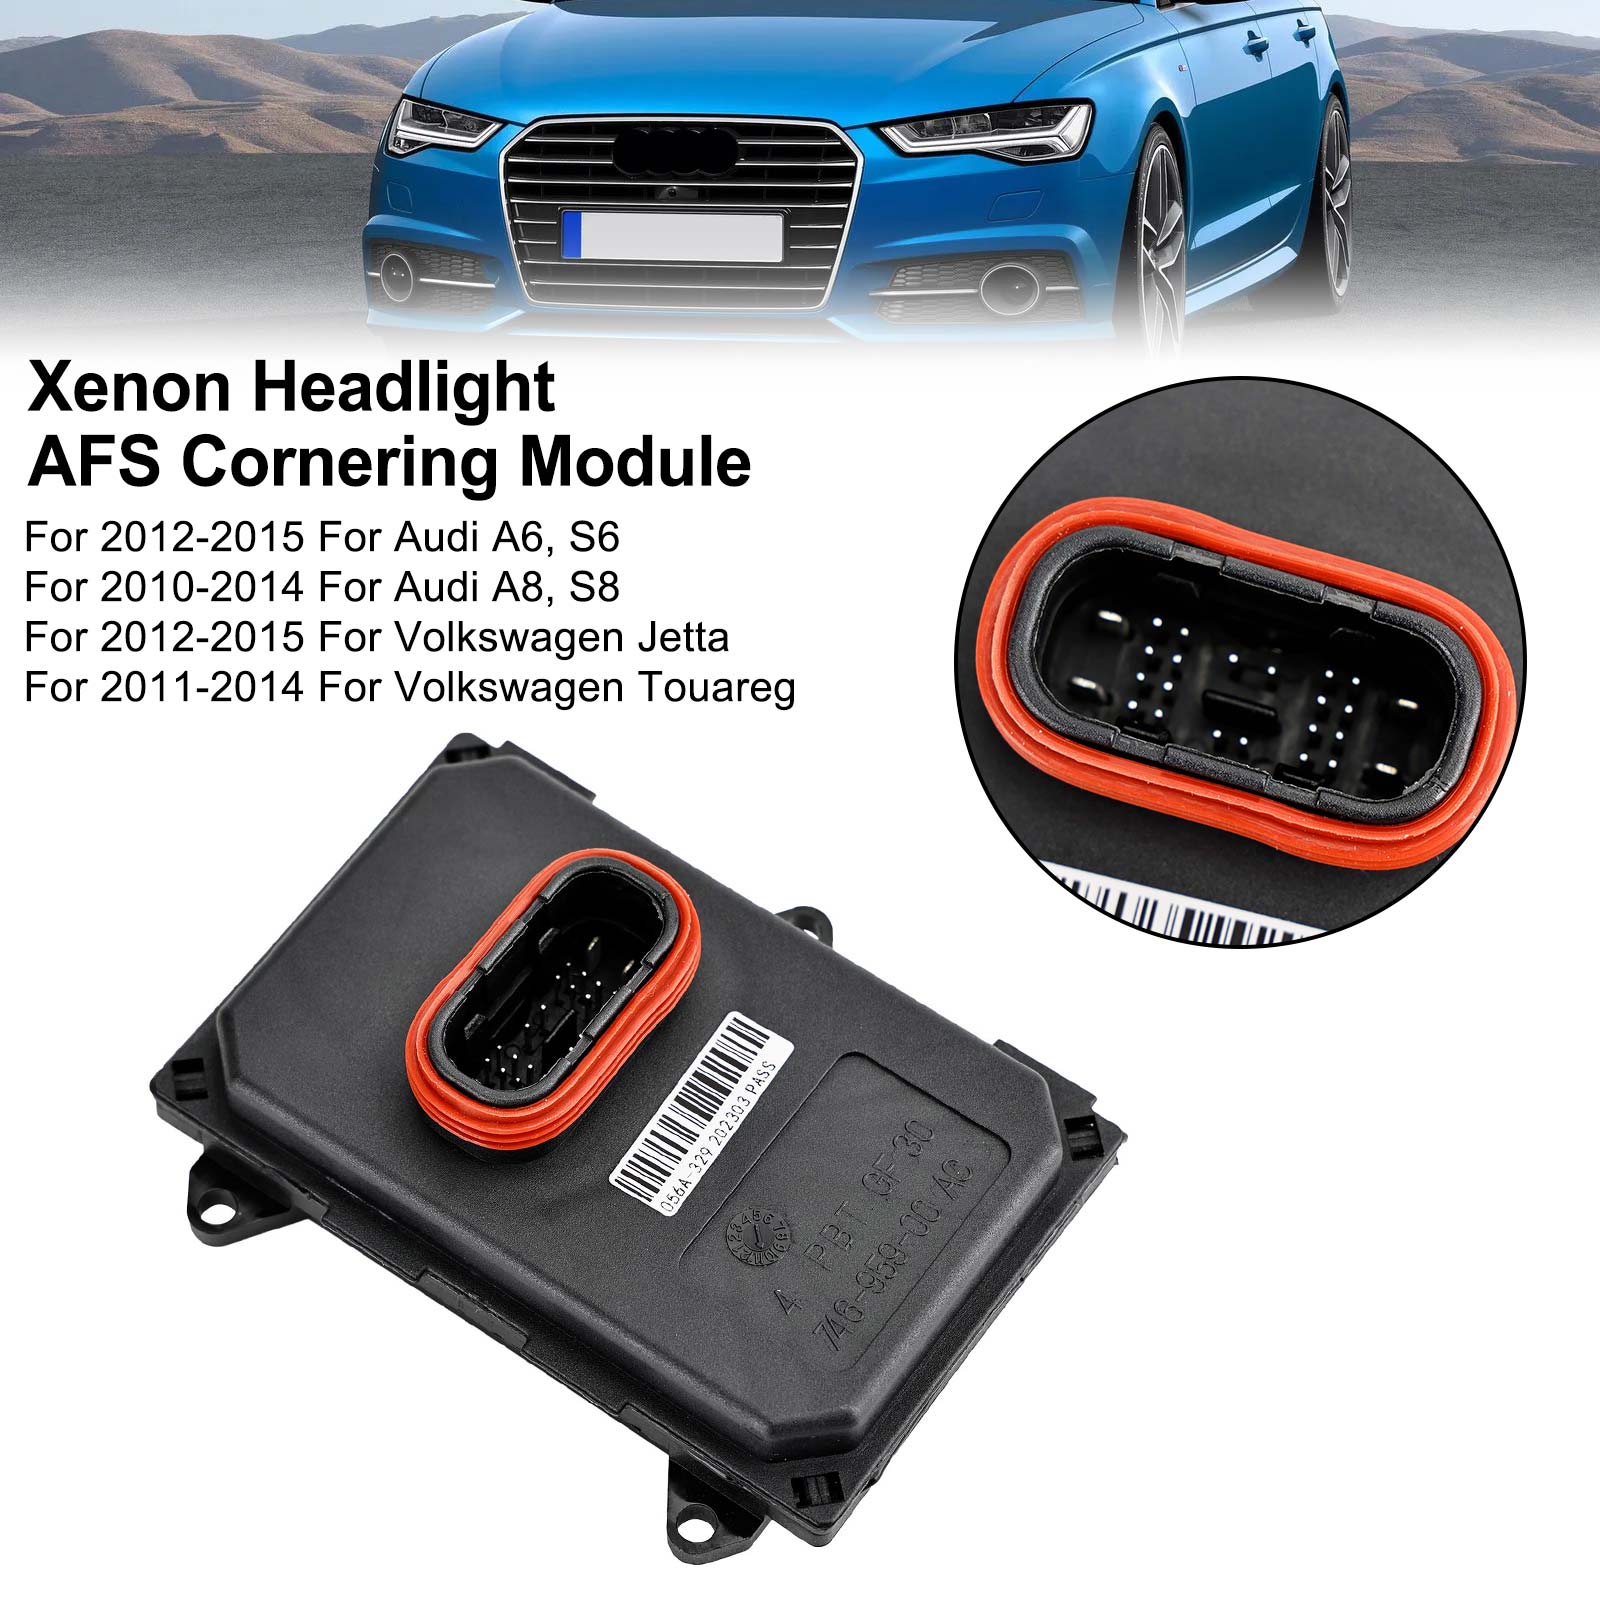 Xenon Headlight AFS Cornering Module 4H0941329 For Audi A3 VW Touareg Tiguan